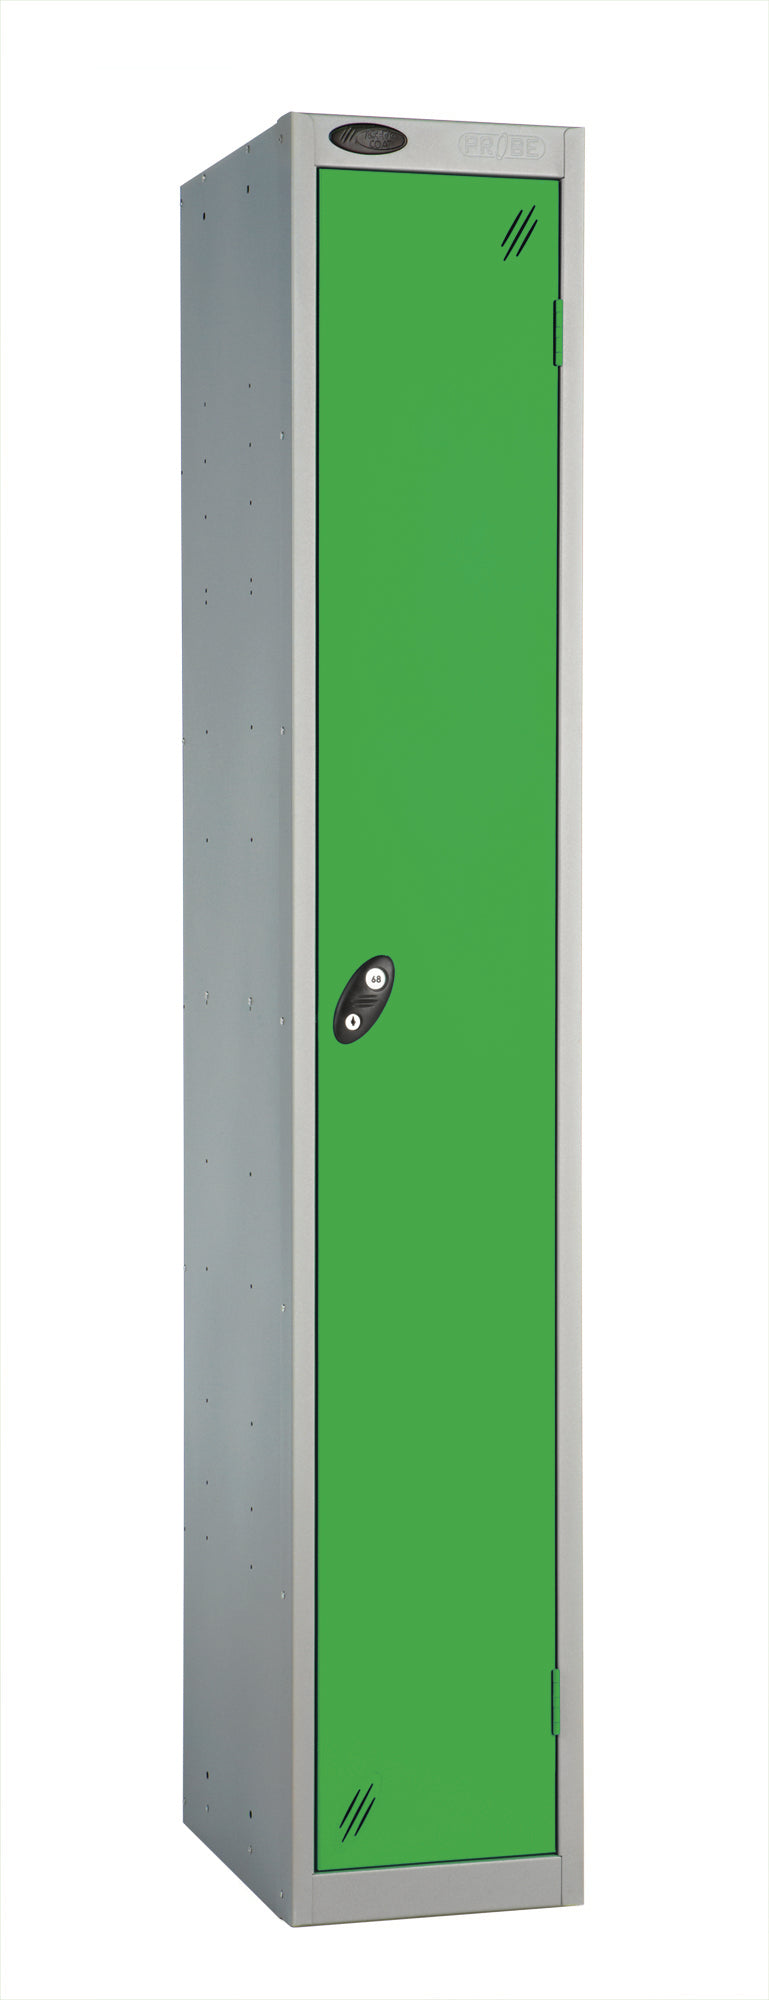 PROBEBOX STANDARD 1 NEST STEEL LOCKERS - FOREST GREEN 1 DOOR Storage Lockers > Lockers > Cabinets > Storage > Probe > One Stop For Safety   